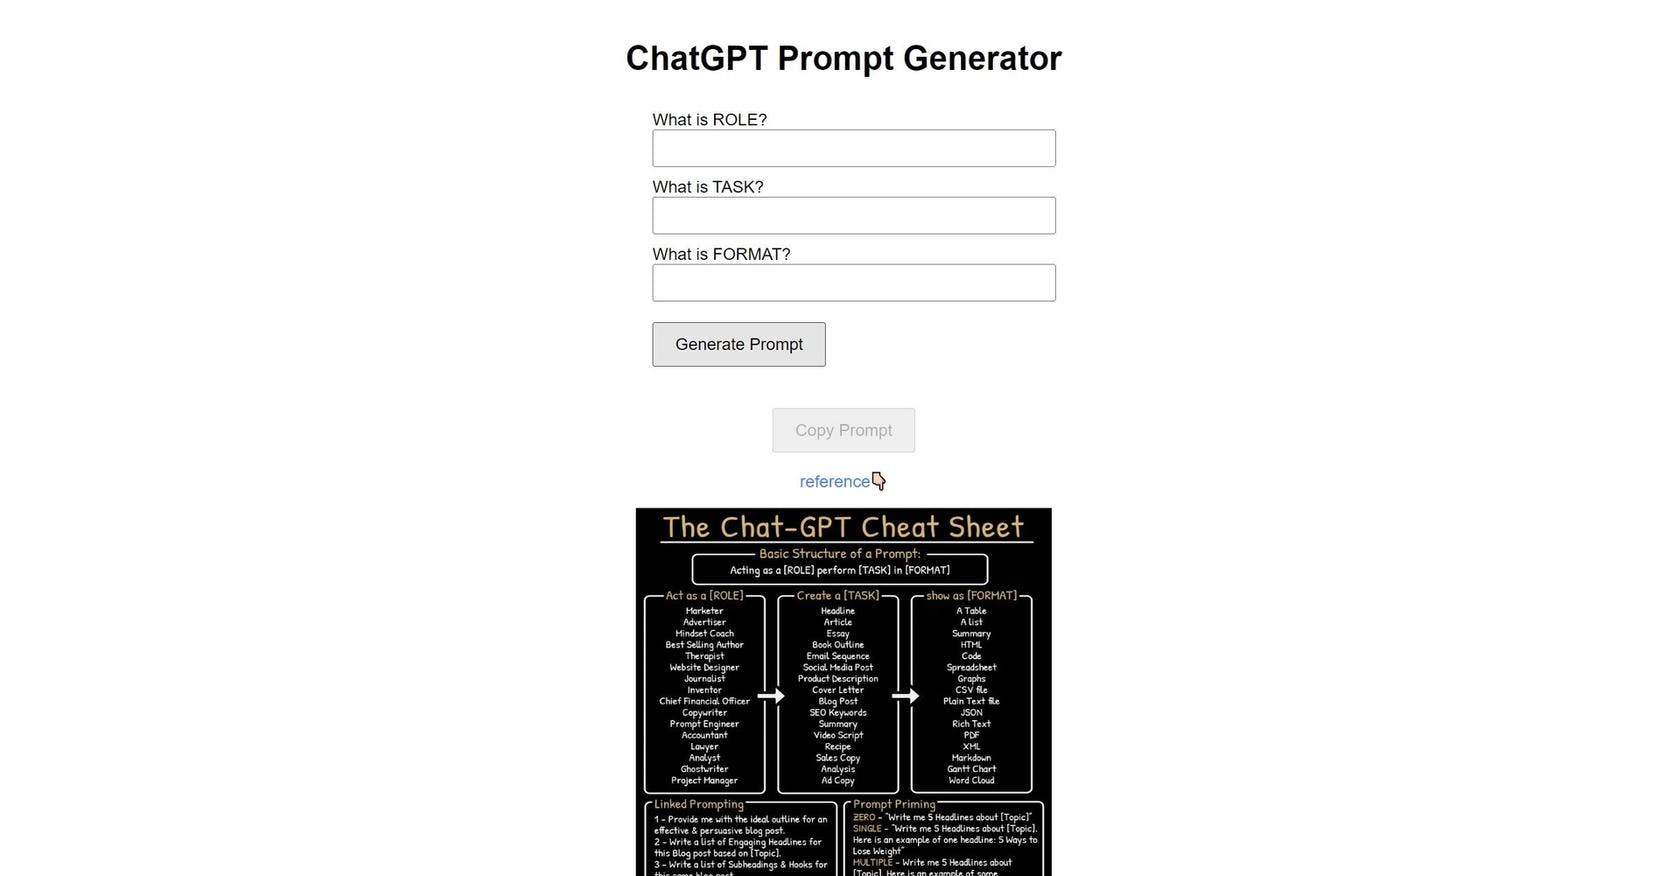 ChatGPT Prompt Generator